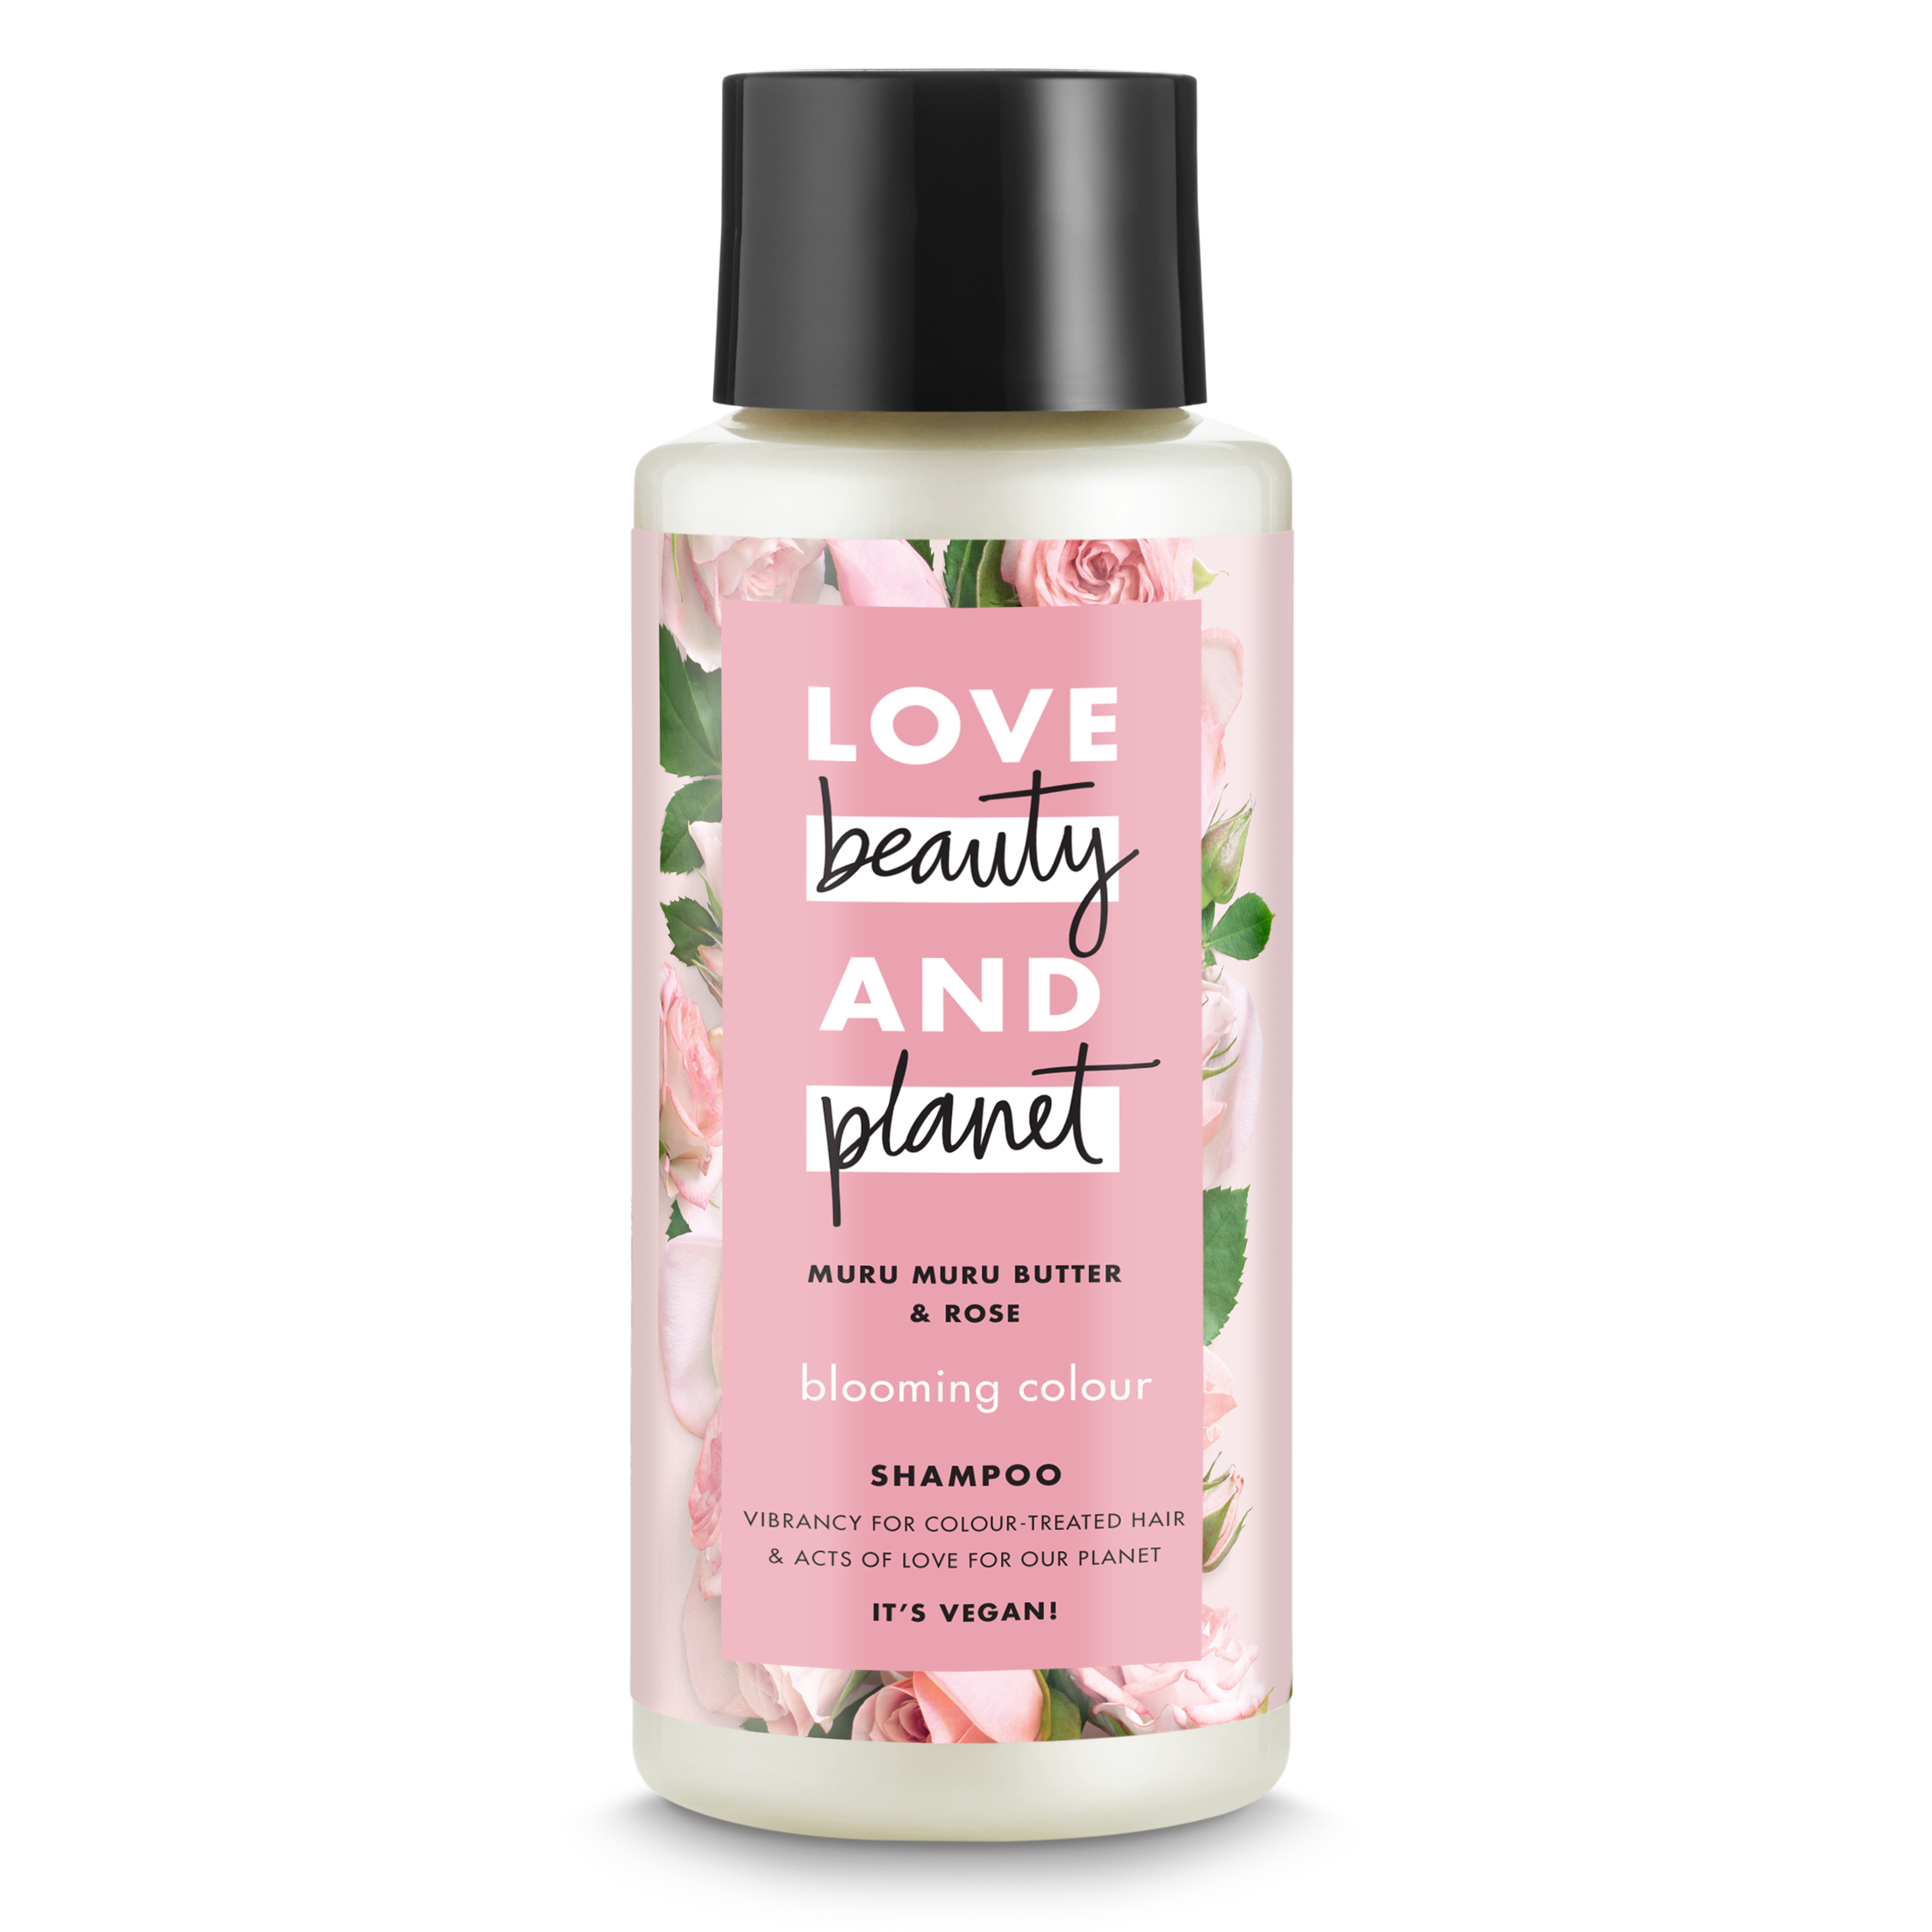 love beauty and planet szampon wizaz opinie